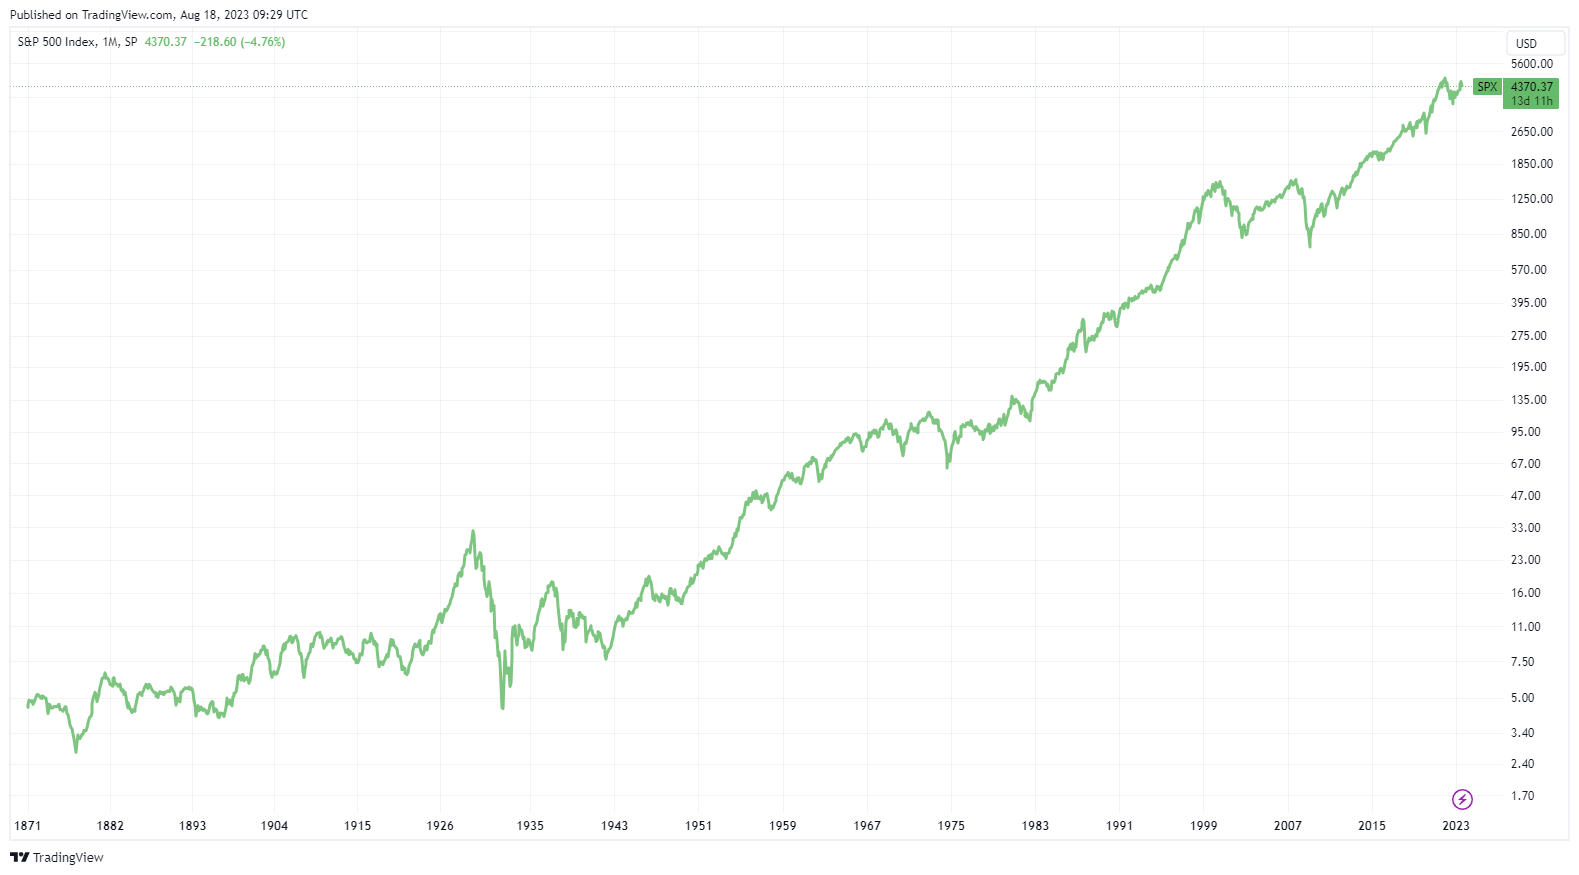 Koers S&P500 index sinds 1871